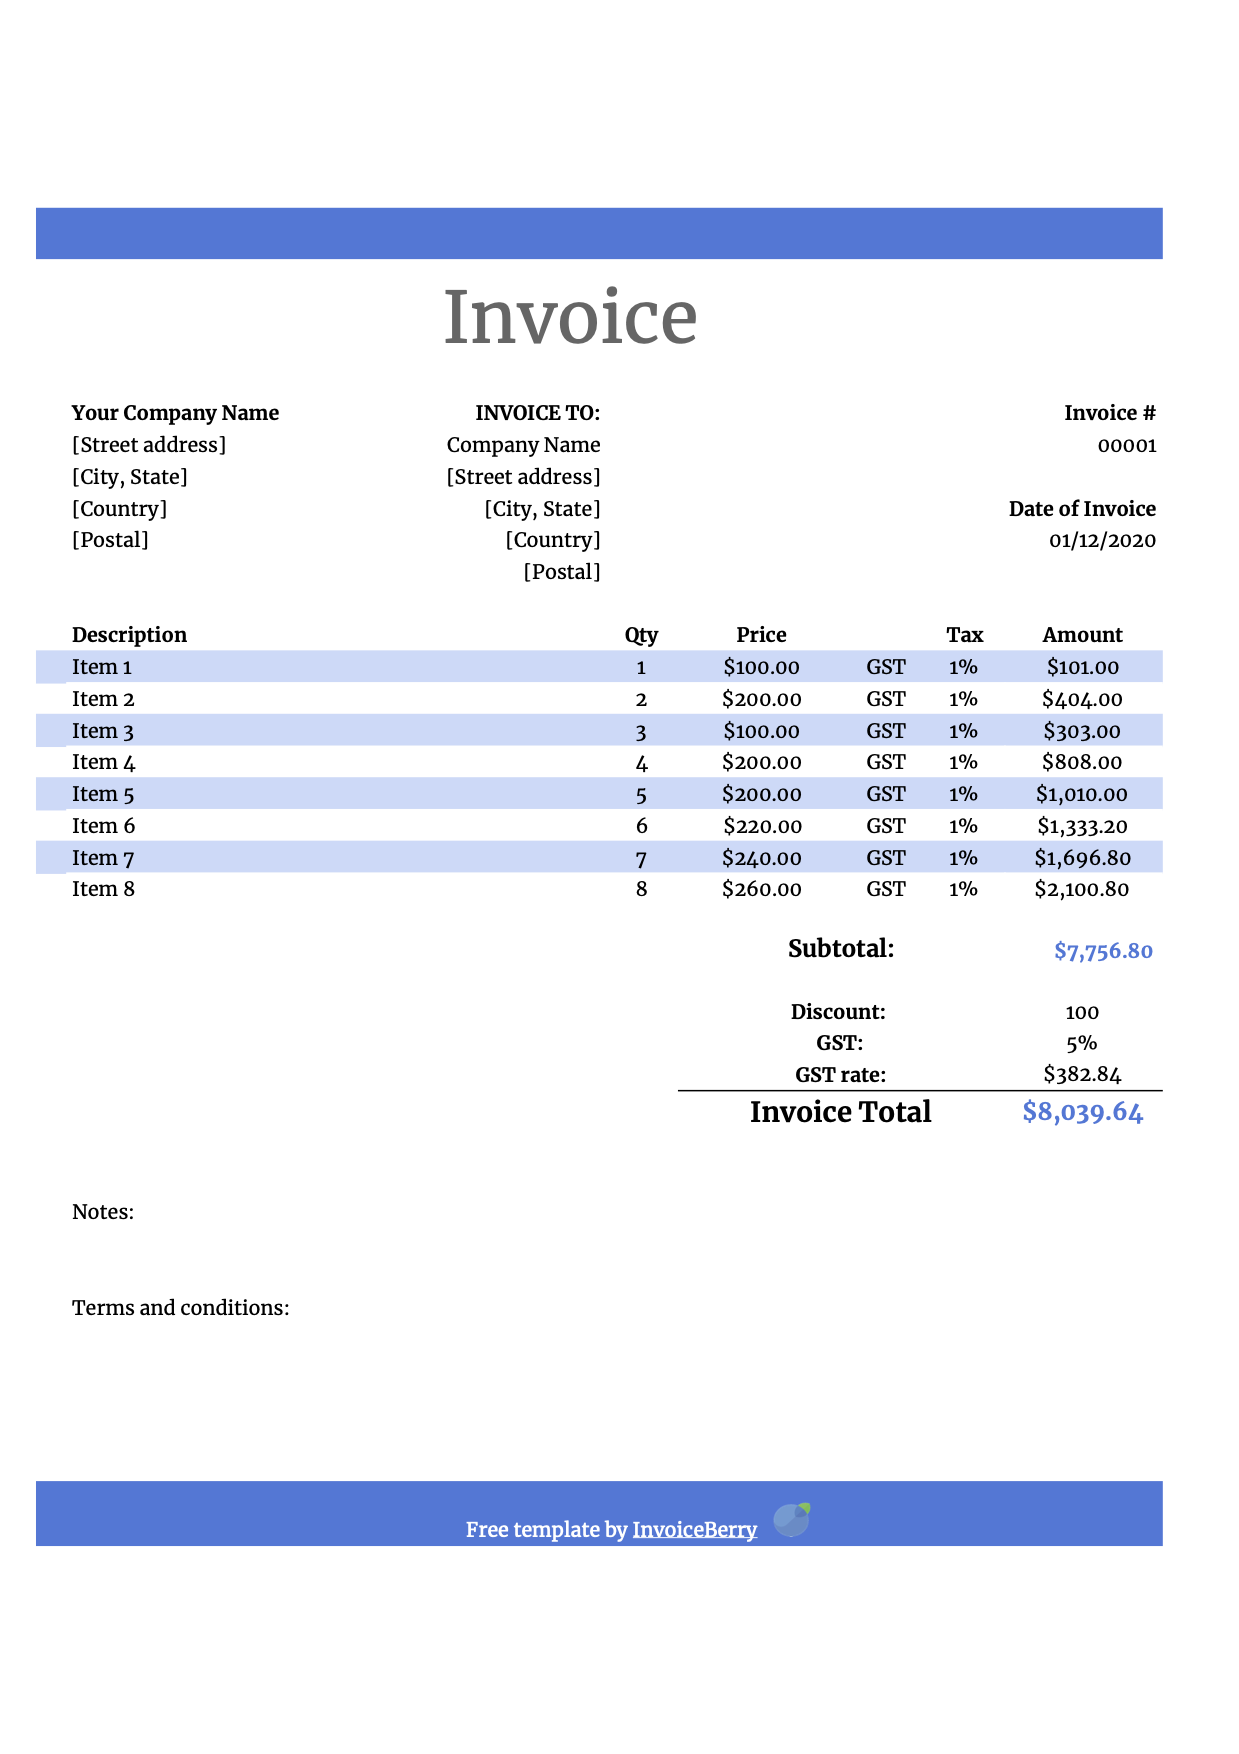 Free Google Drive Invoice Templates: Blank Docs & Sheets Invoices In Google Drive Invoice Template